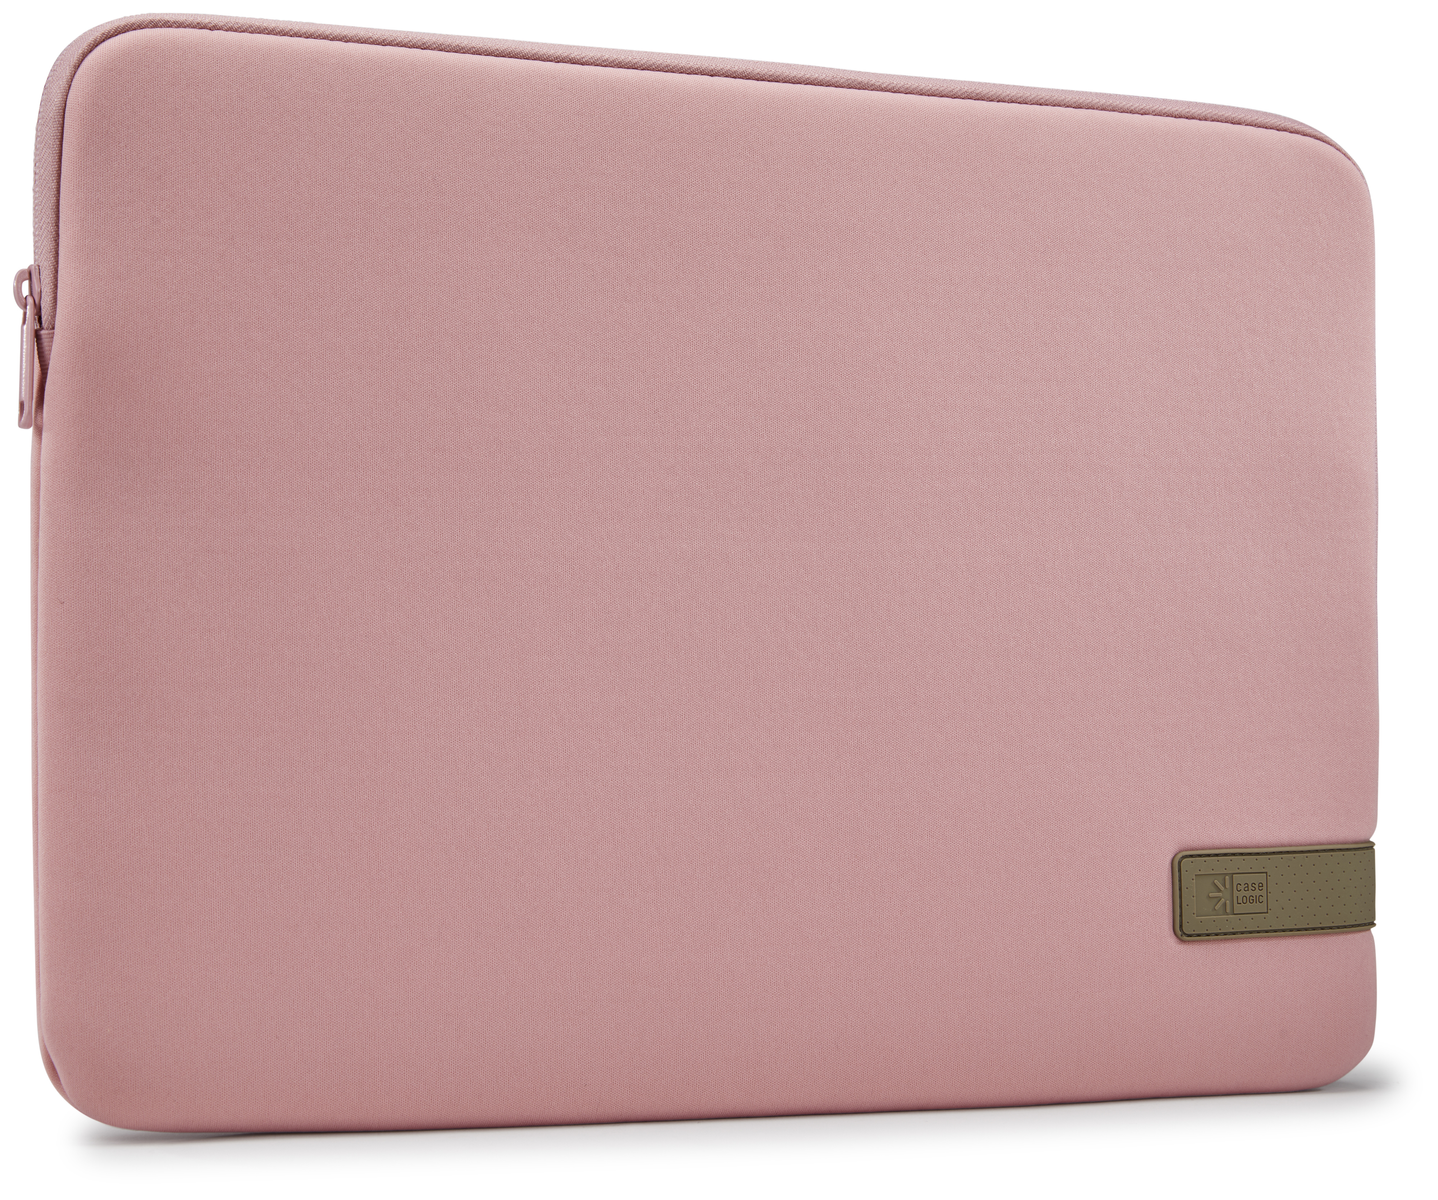 Reflect Zephyr Sleeve Sleeve CASE Notebook Pink/Mermaid für Polyester, LOGIC Universal